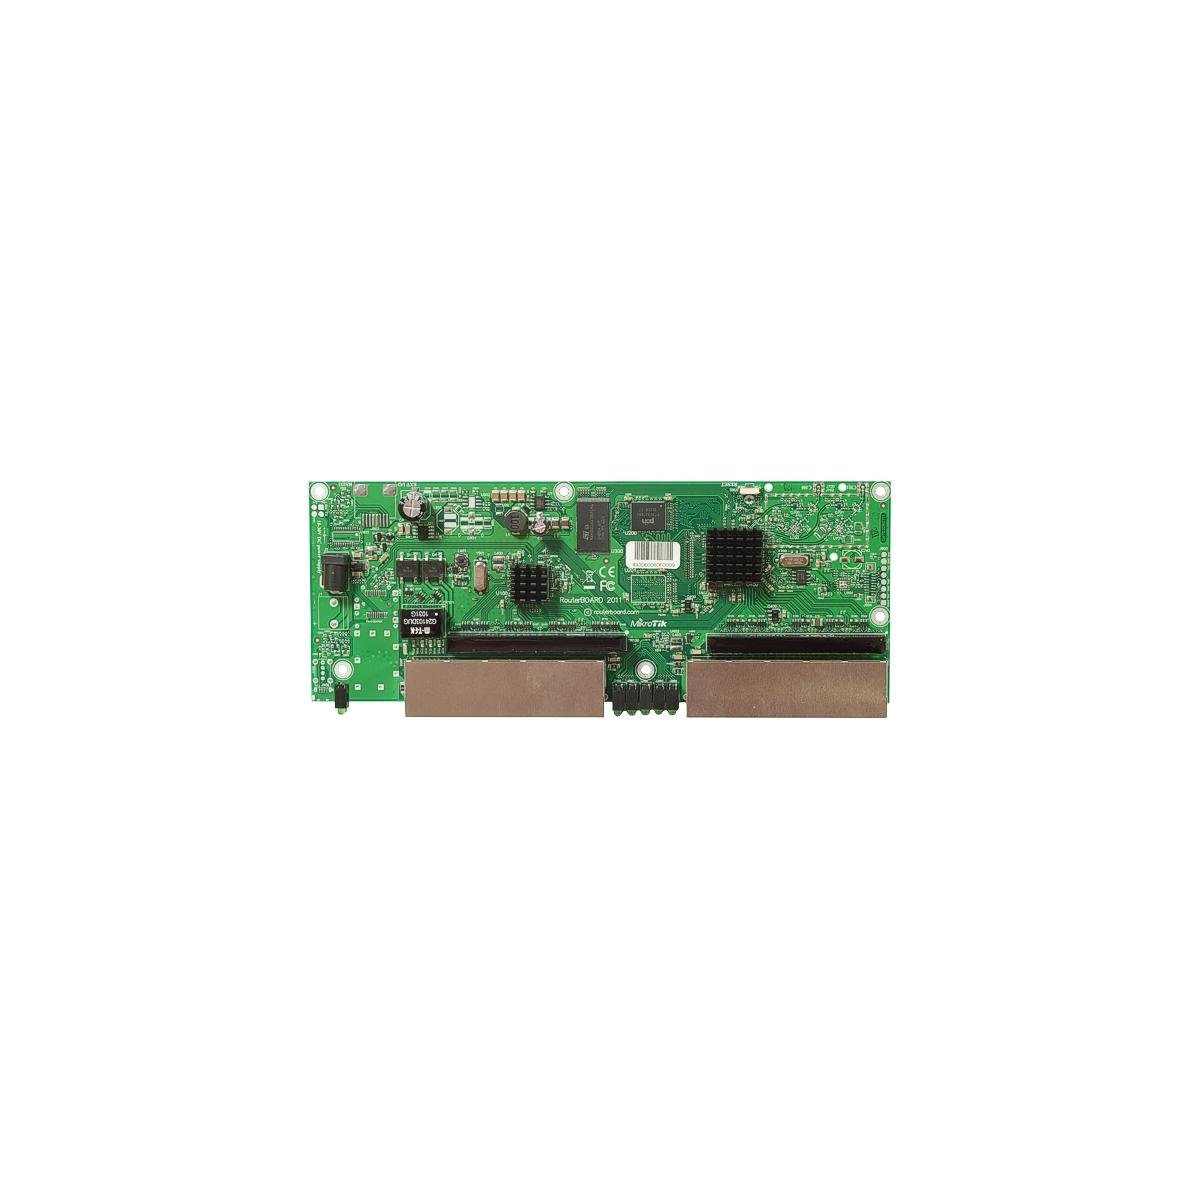 MikroTik RB2011L - RouterBOARD, Level 4, 600 MHz Netzwerk-Switch